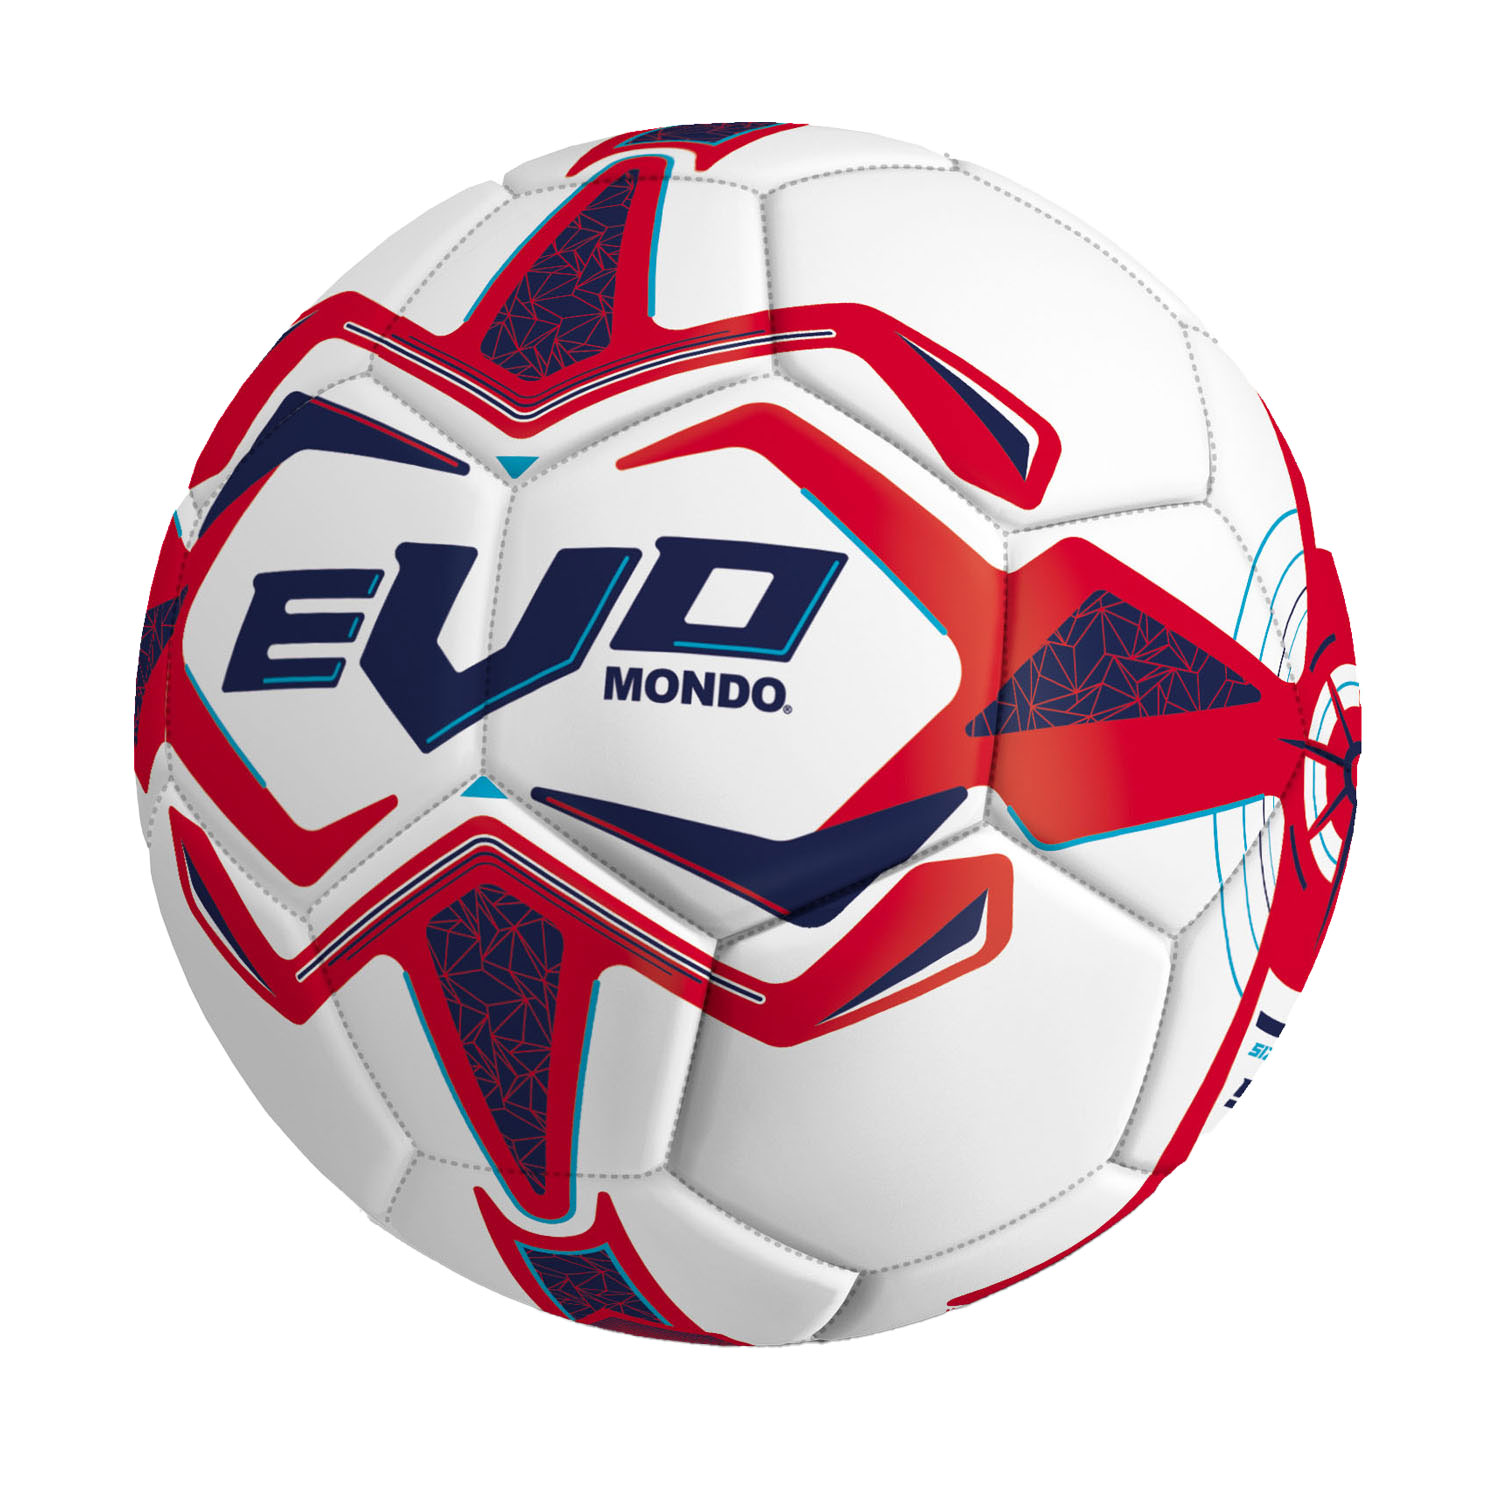 Mondo Football Evo, 21,5 cm